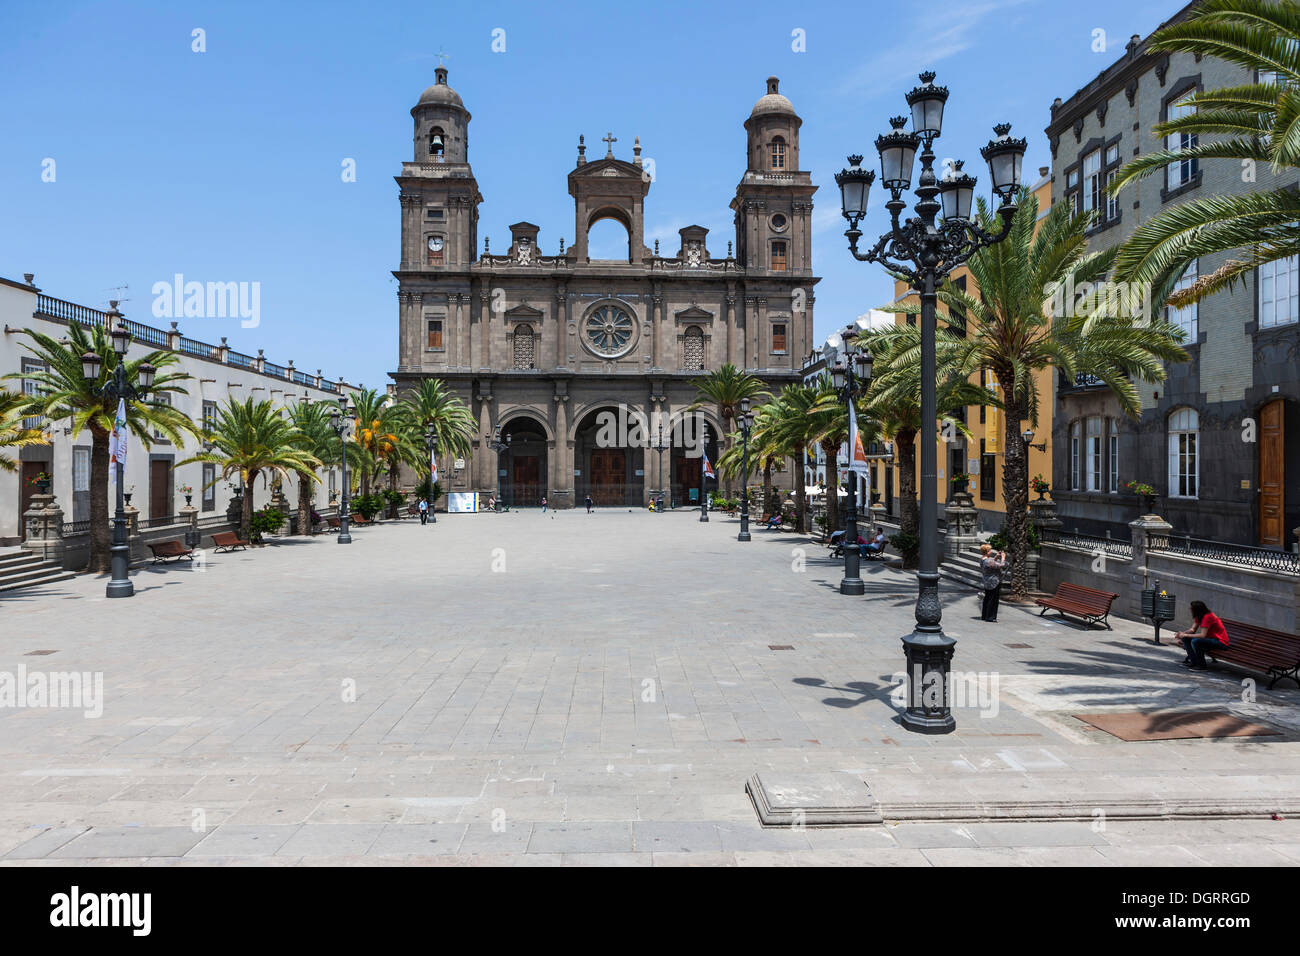 Kathedrale von Santa Ana, Plaza Santa Ana, Vegueta, der Altstadt von Las  Palmas, Las Palmas de Gran Canaria, Gran Canaria Stockfotografie - Alamy